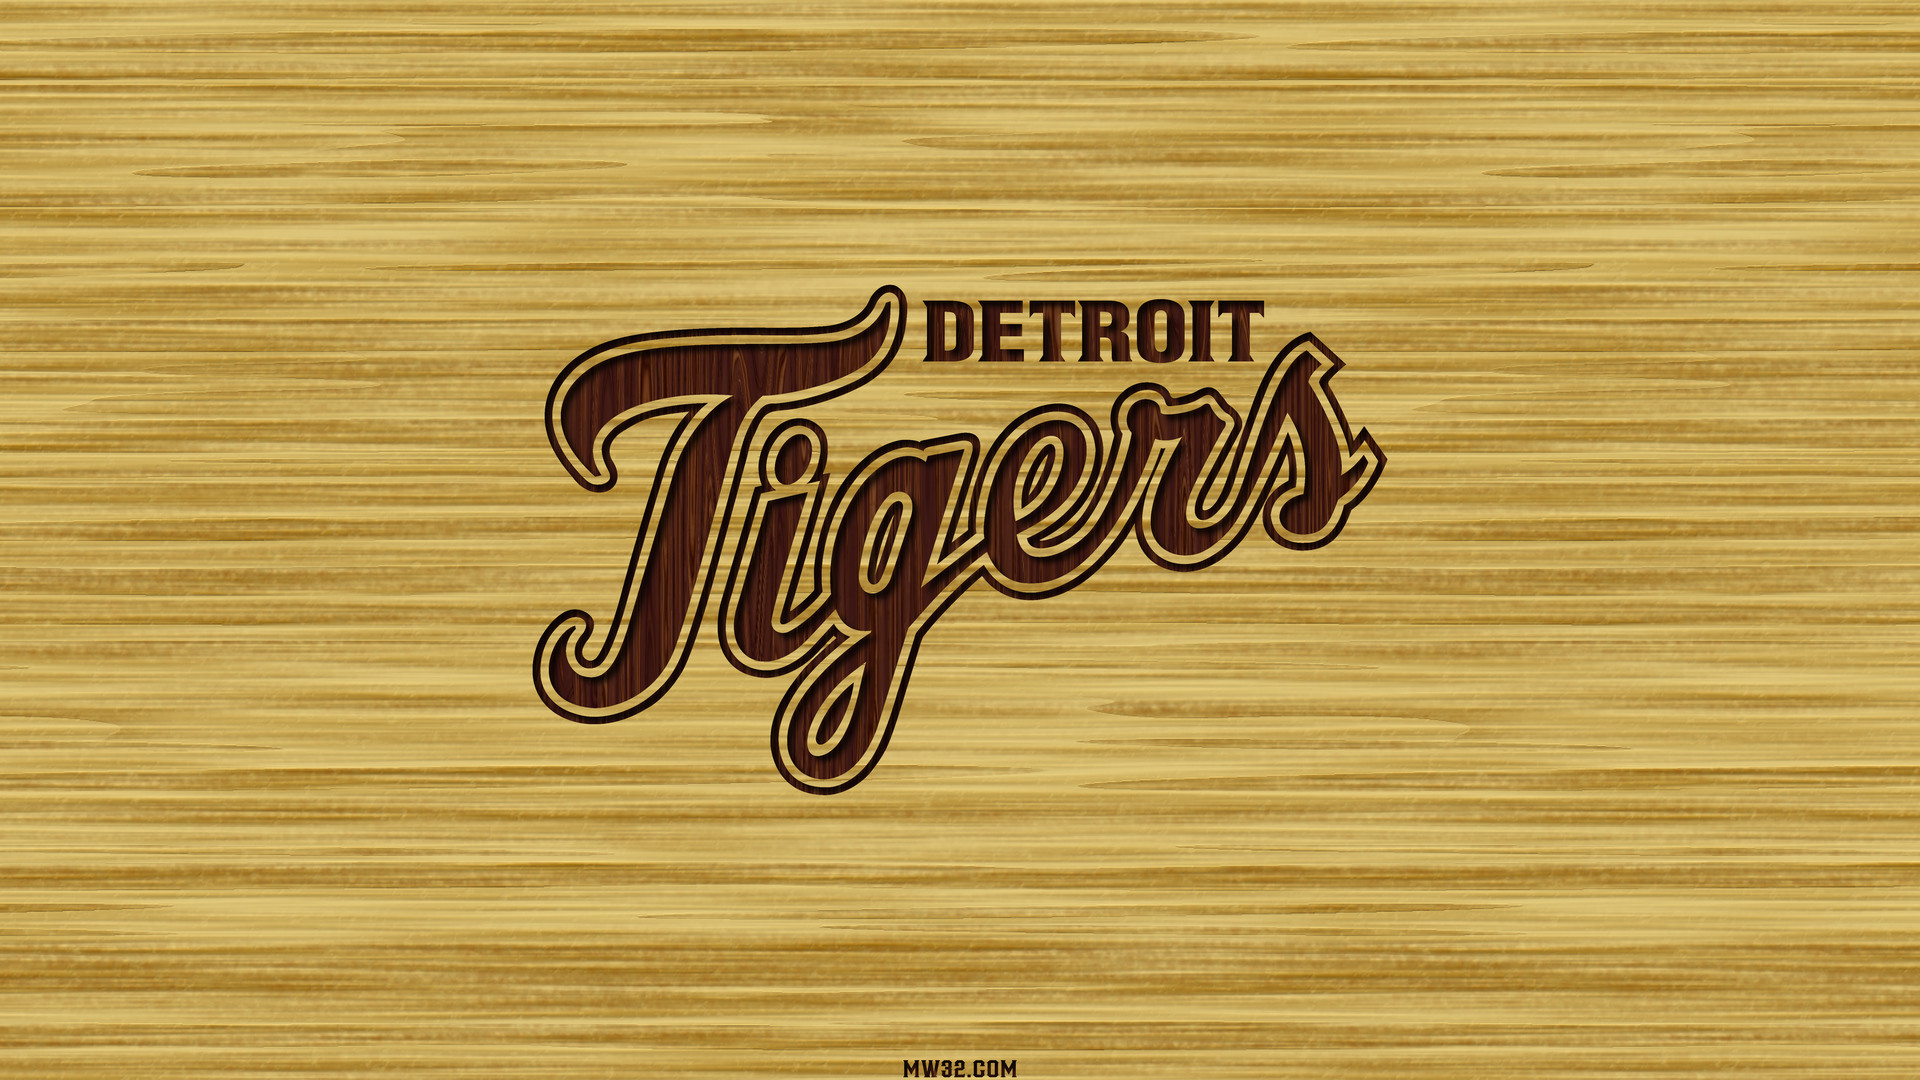 1920x1080 Detroit Tigers HD Wallpapers